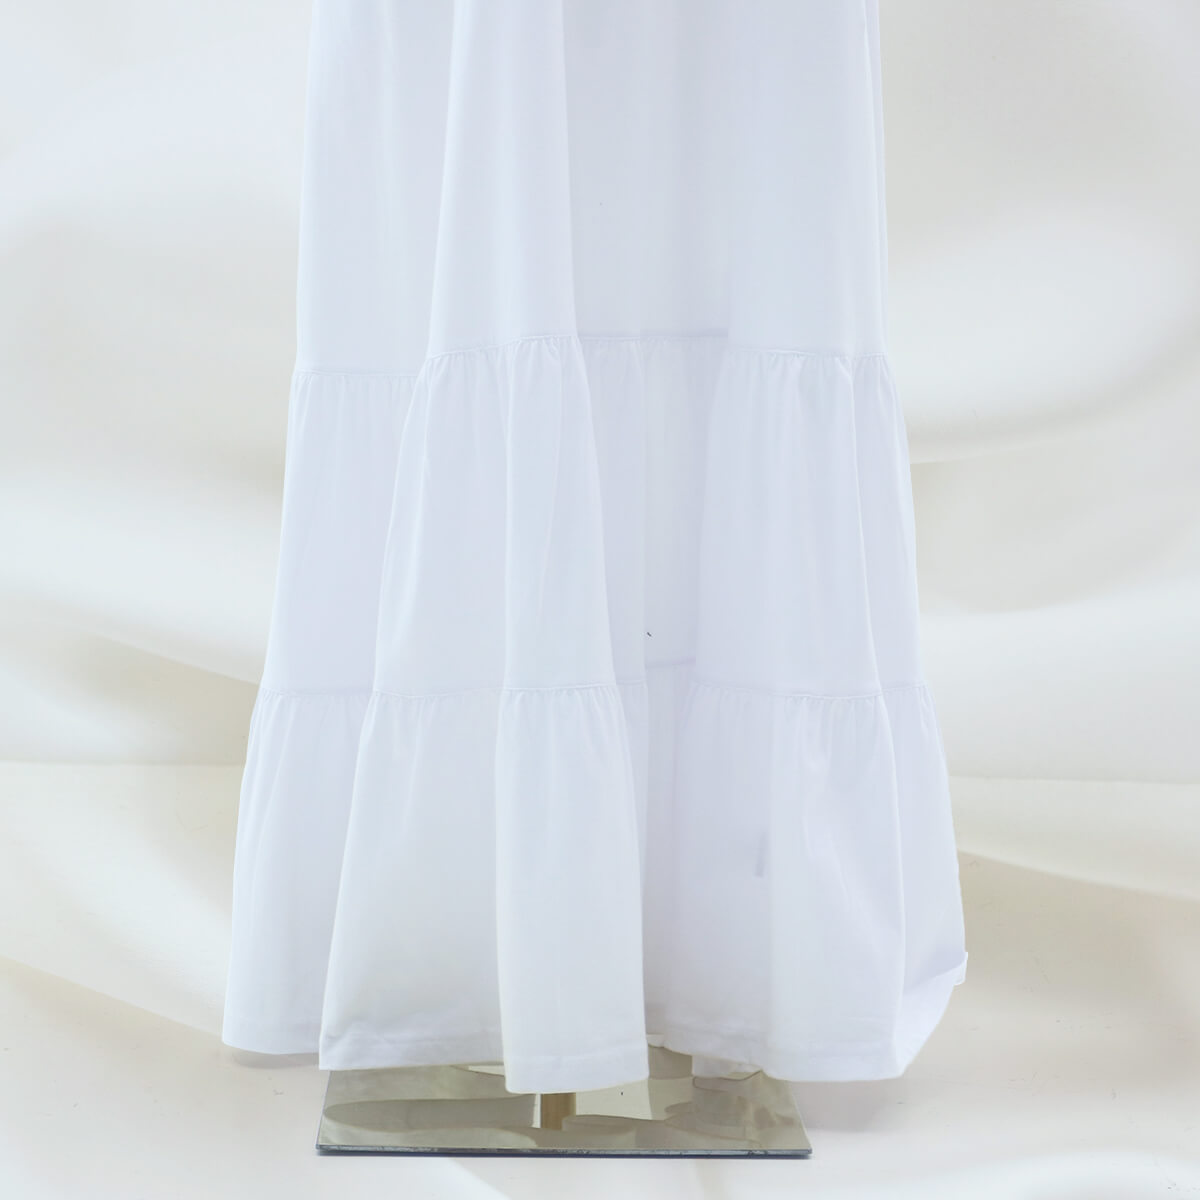 Naqeeya Dress - White